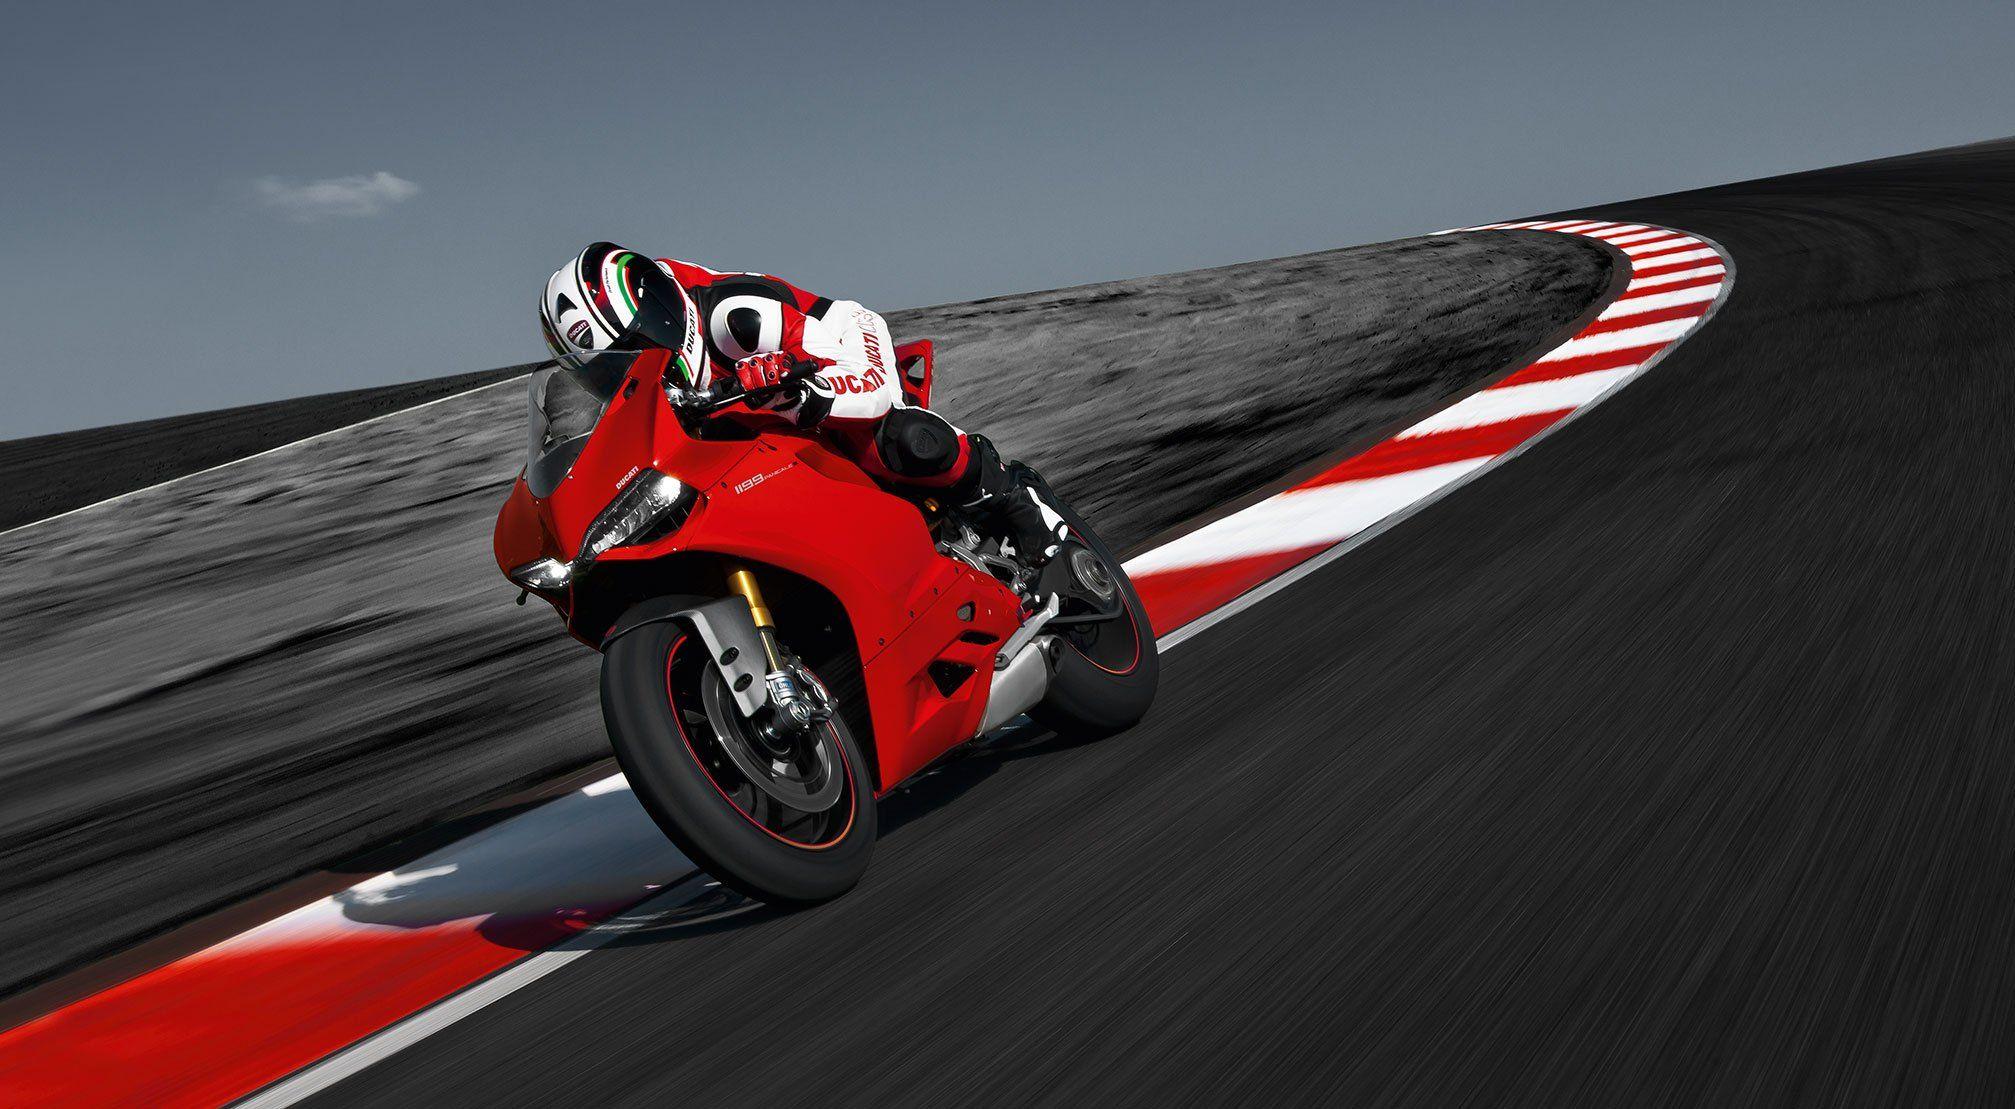 Ducati 1299 Panigale Wallpaper: Find best latest 2015 Ducati